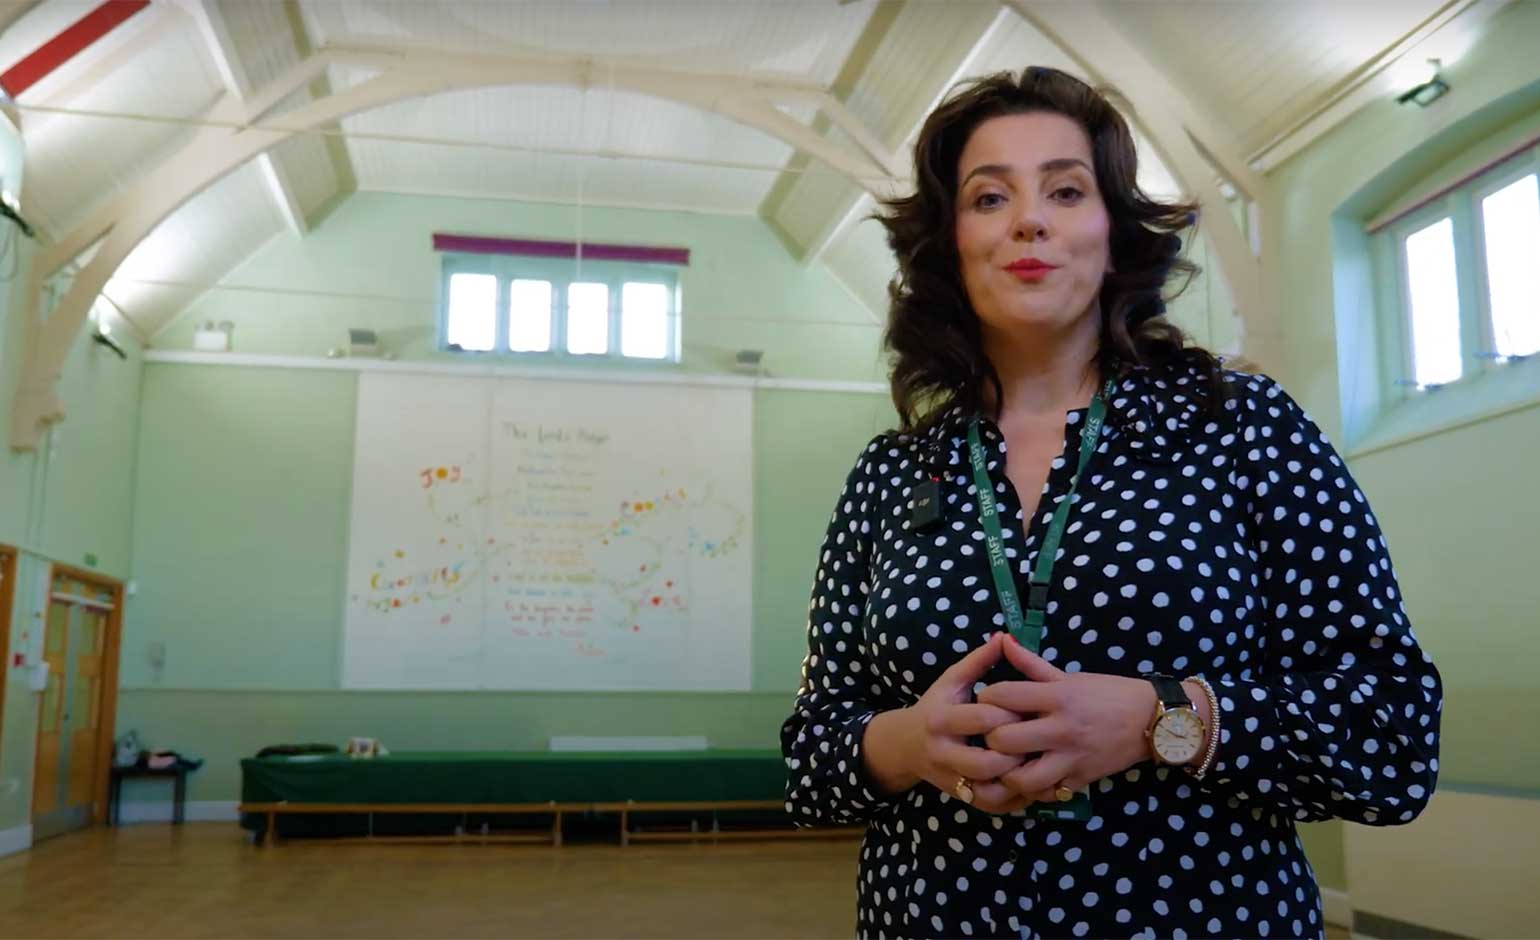 School launches campaign to raise £50,000 for hall refurbishment